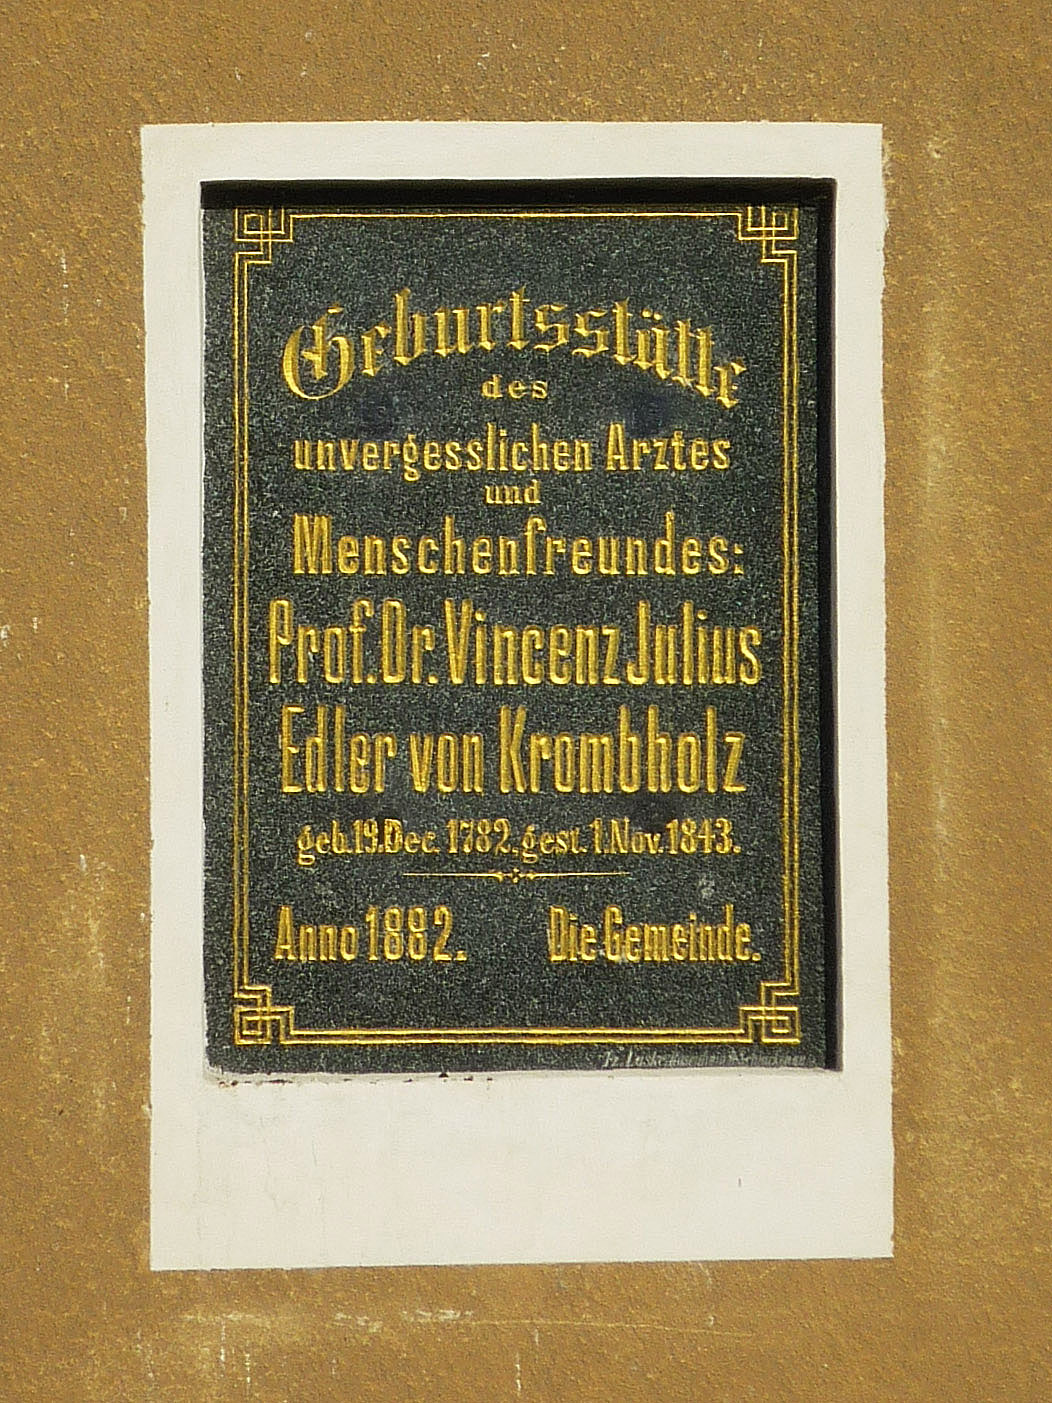 File:Oberpolitz-Krombholz-Tafel.jpg - Wikimedia Commons